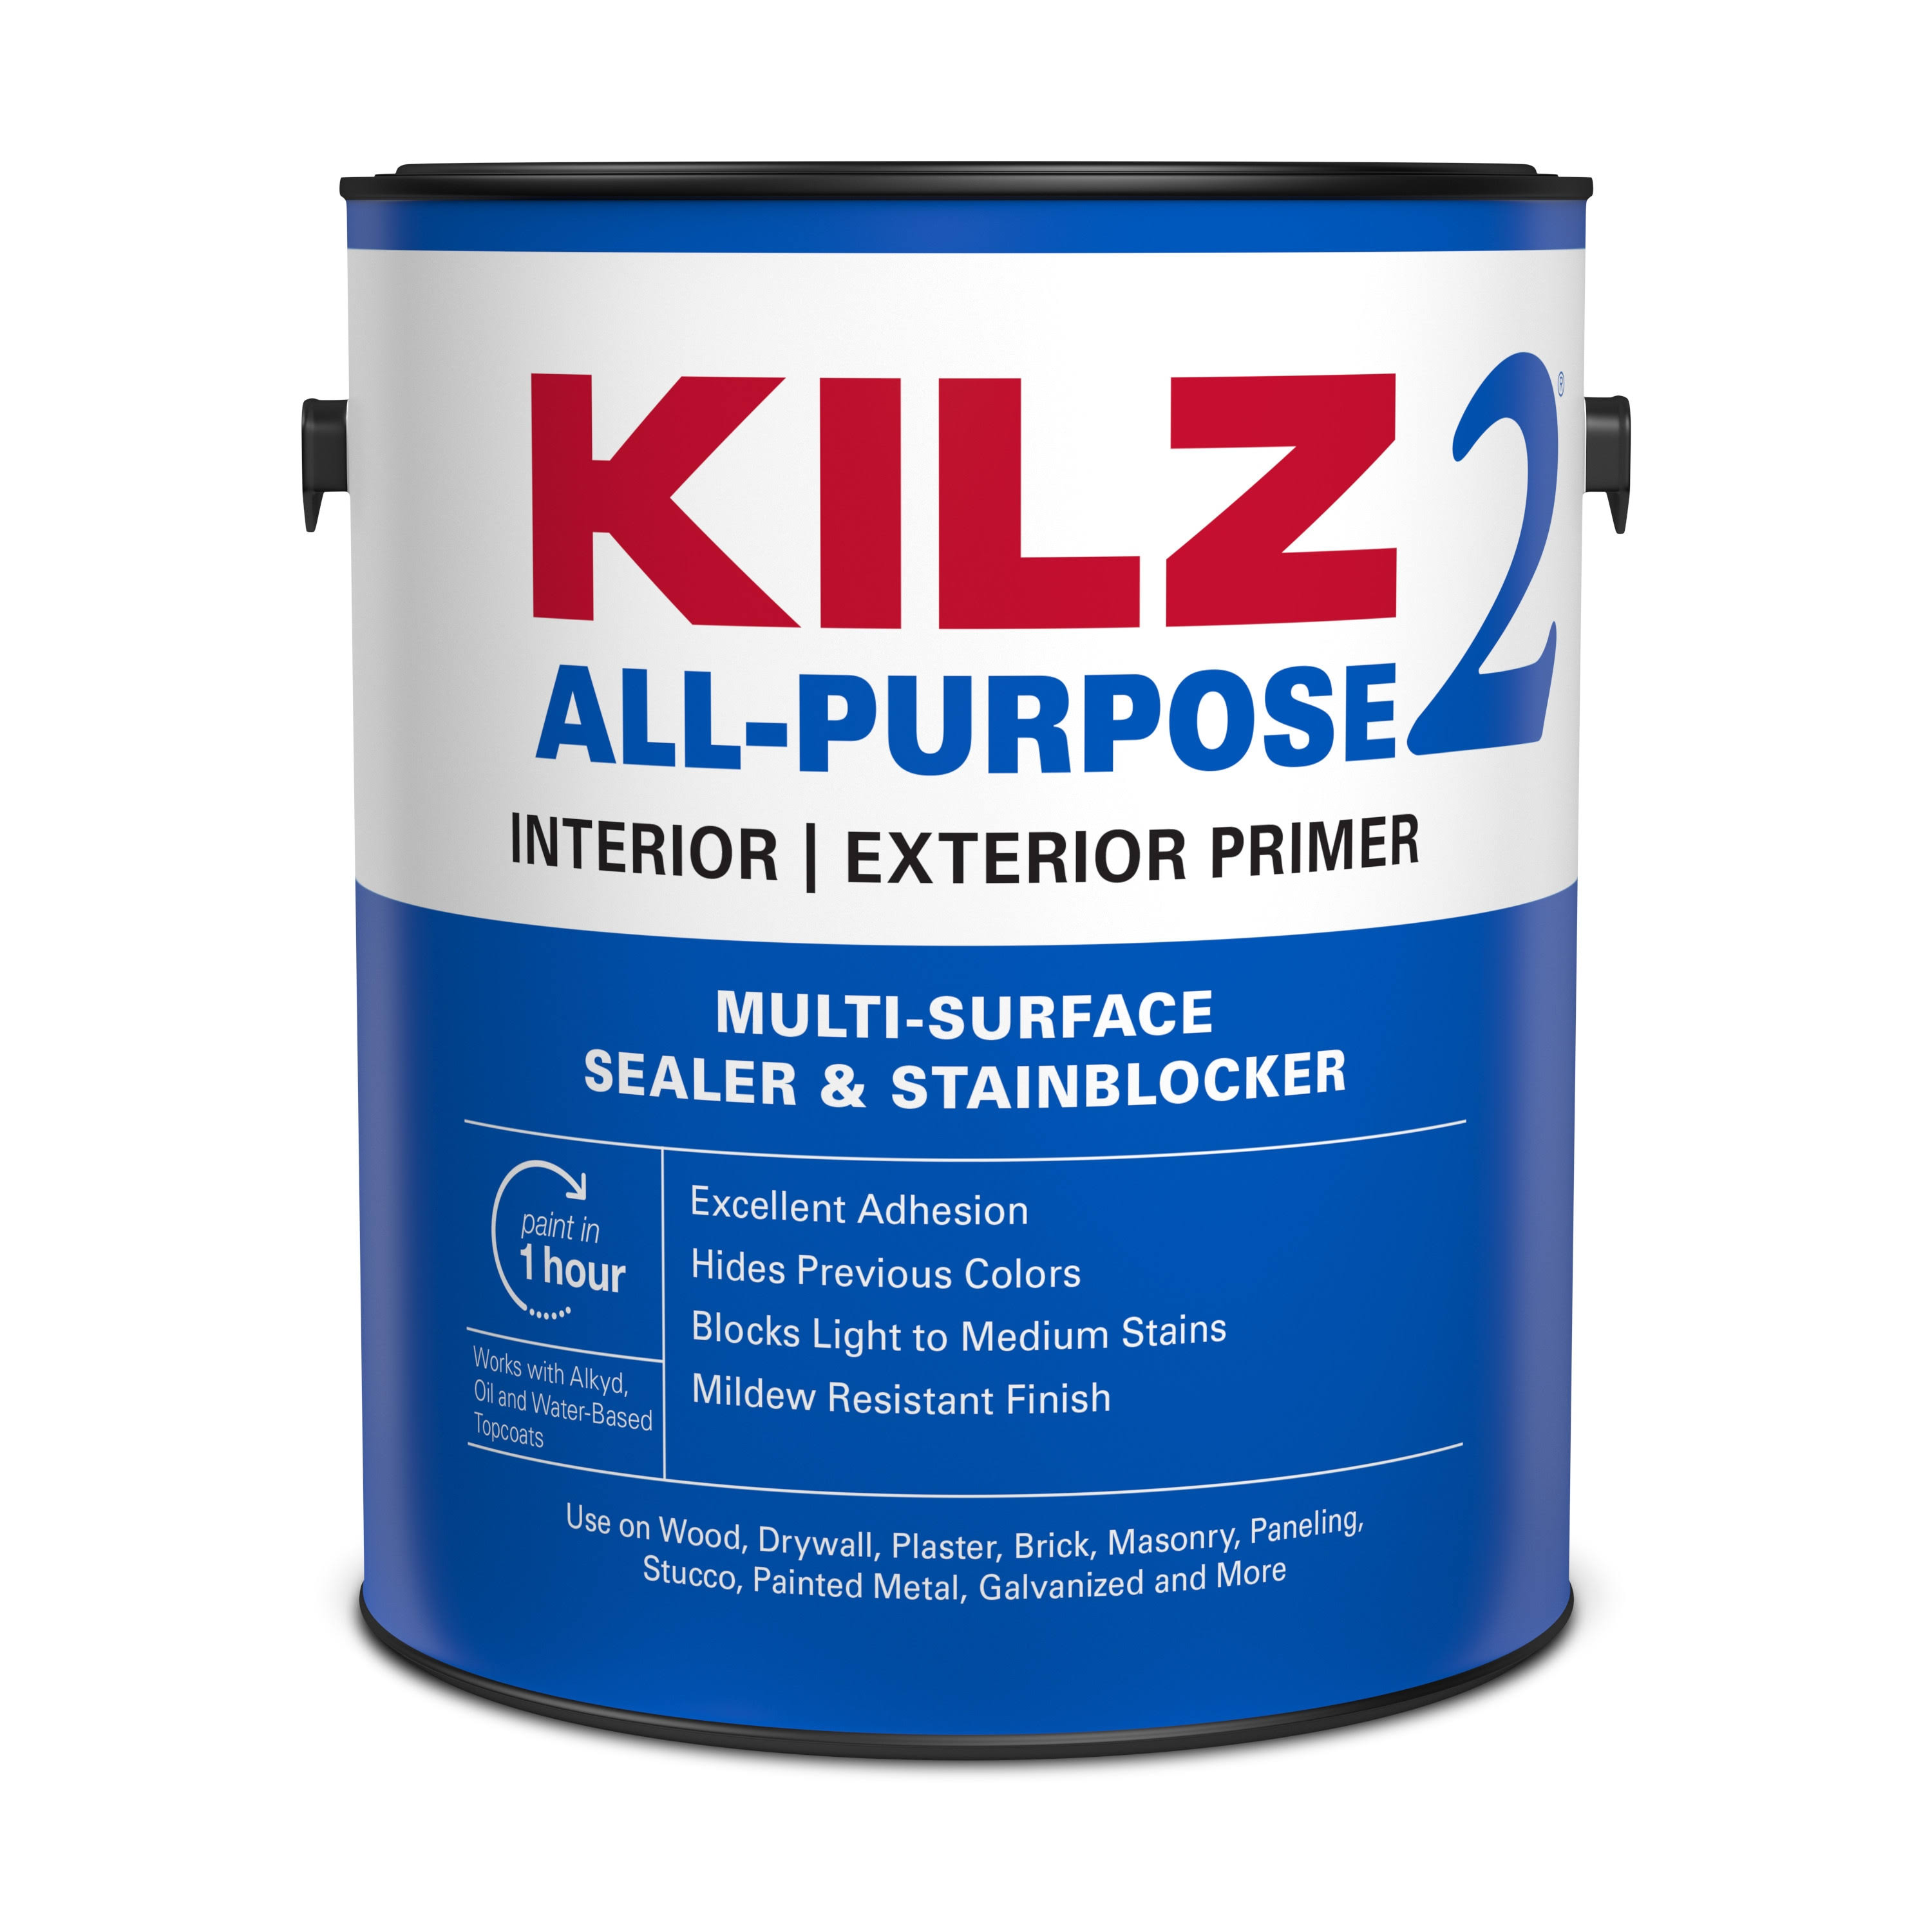 Kilz 2 Water-Based Multi-Purpose Latex Primer and Sealer - White, 1gal